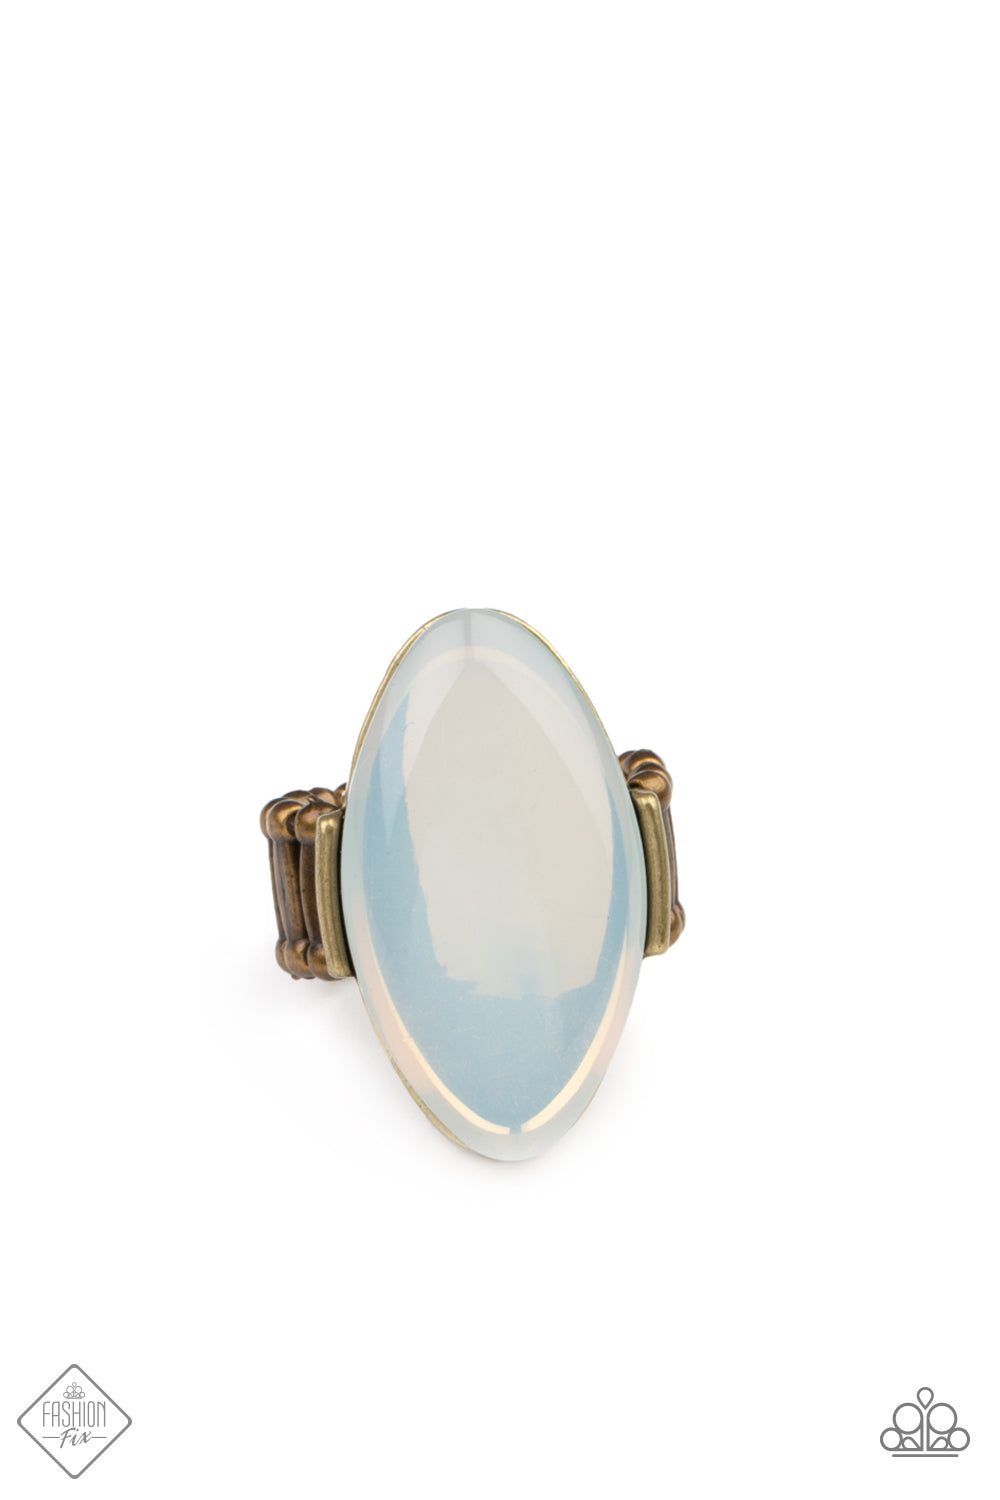 Paparazzi Accessories -  Opal Odyssey Brass Ring Fashion Fix May 2021 #SS0521